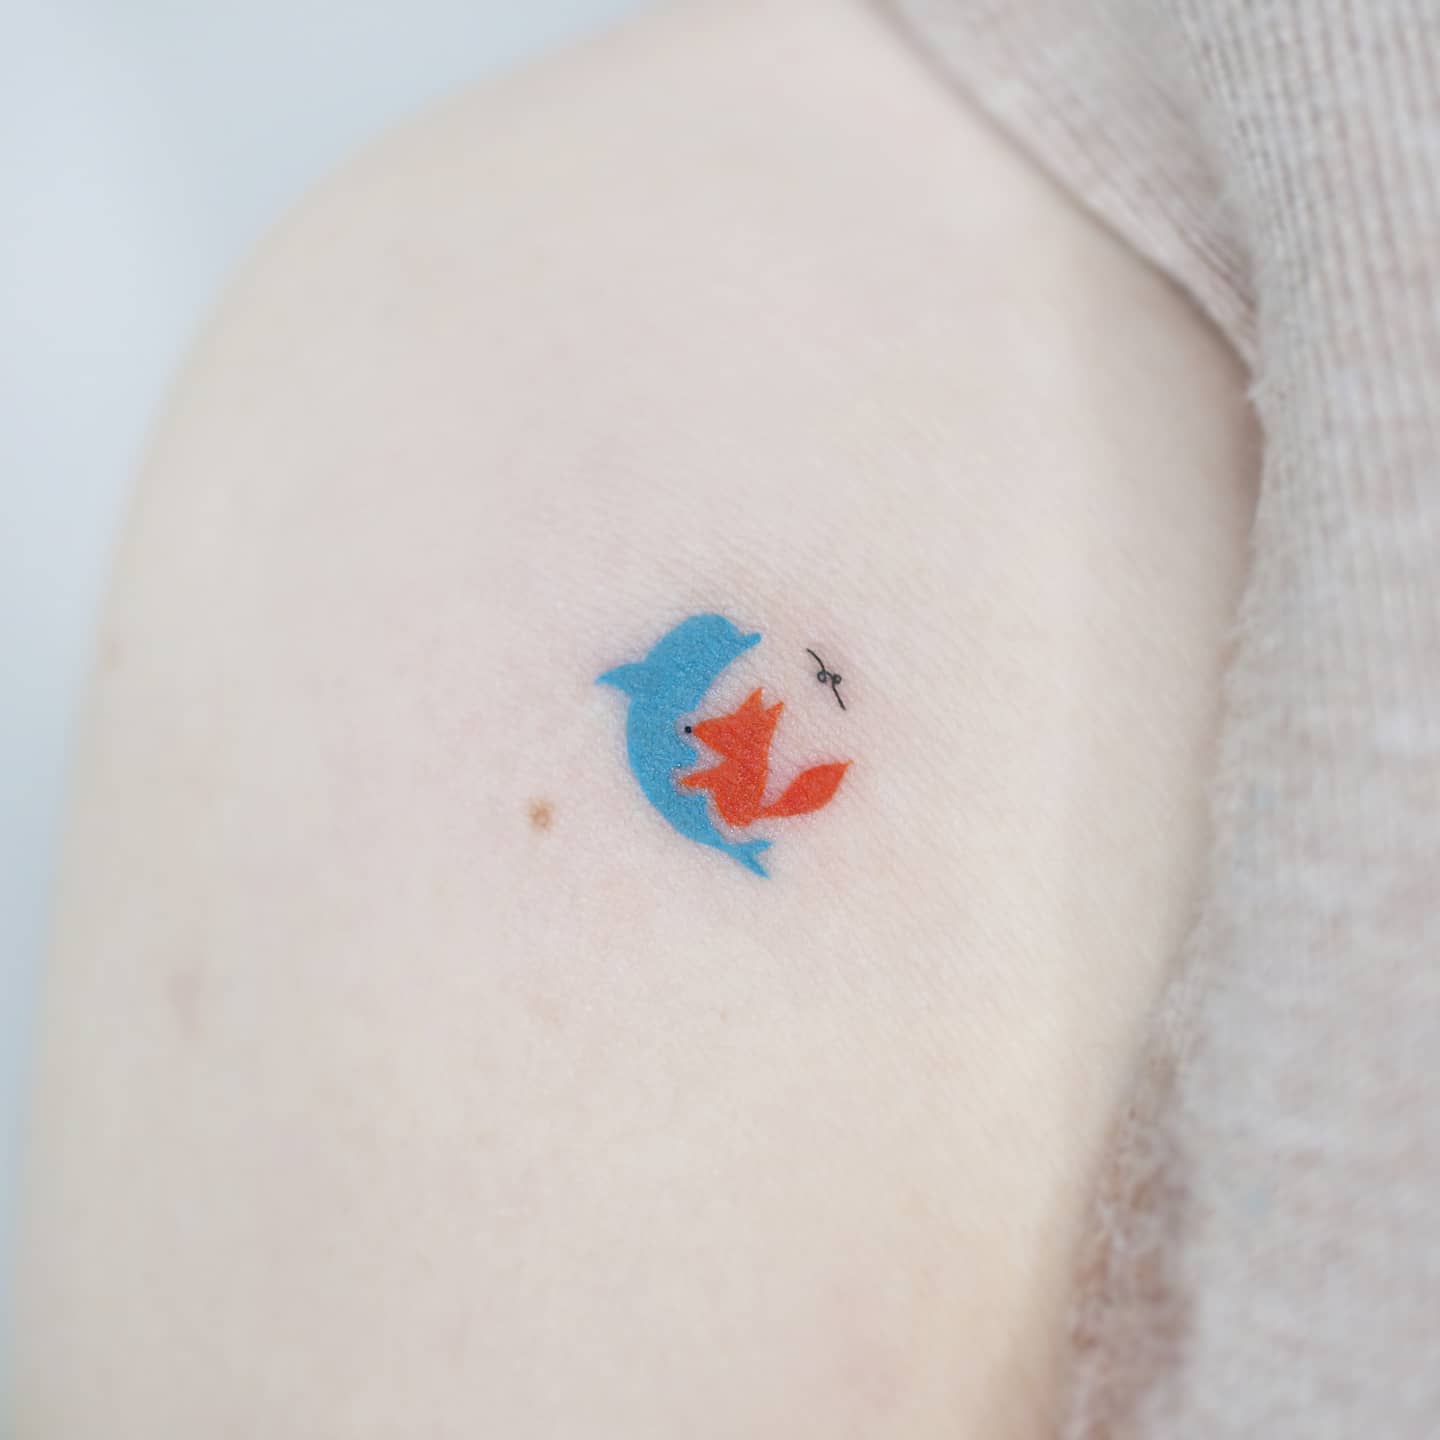 Dolphin design by tattooist namoo